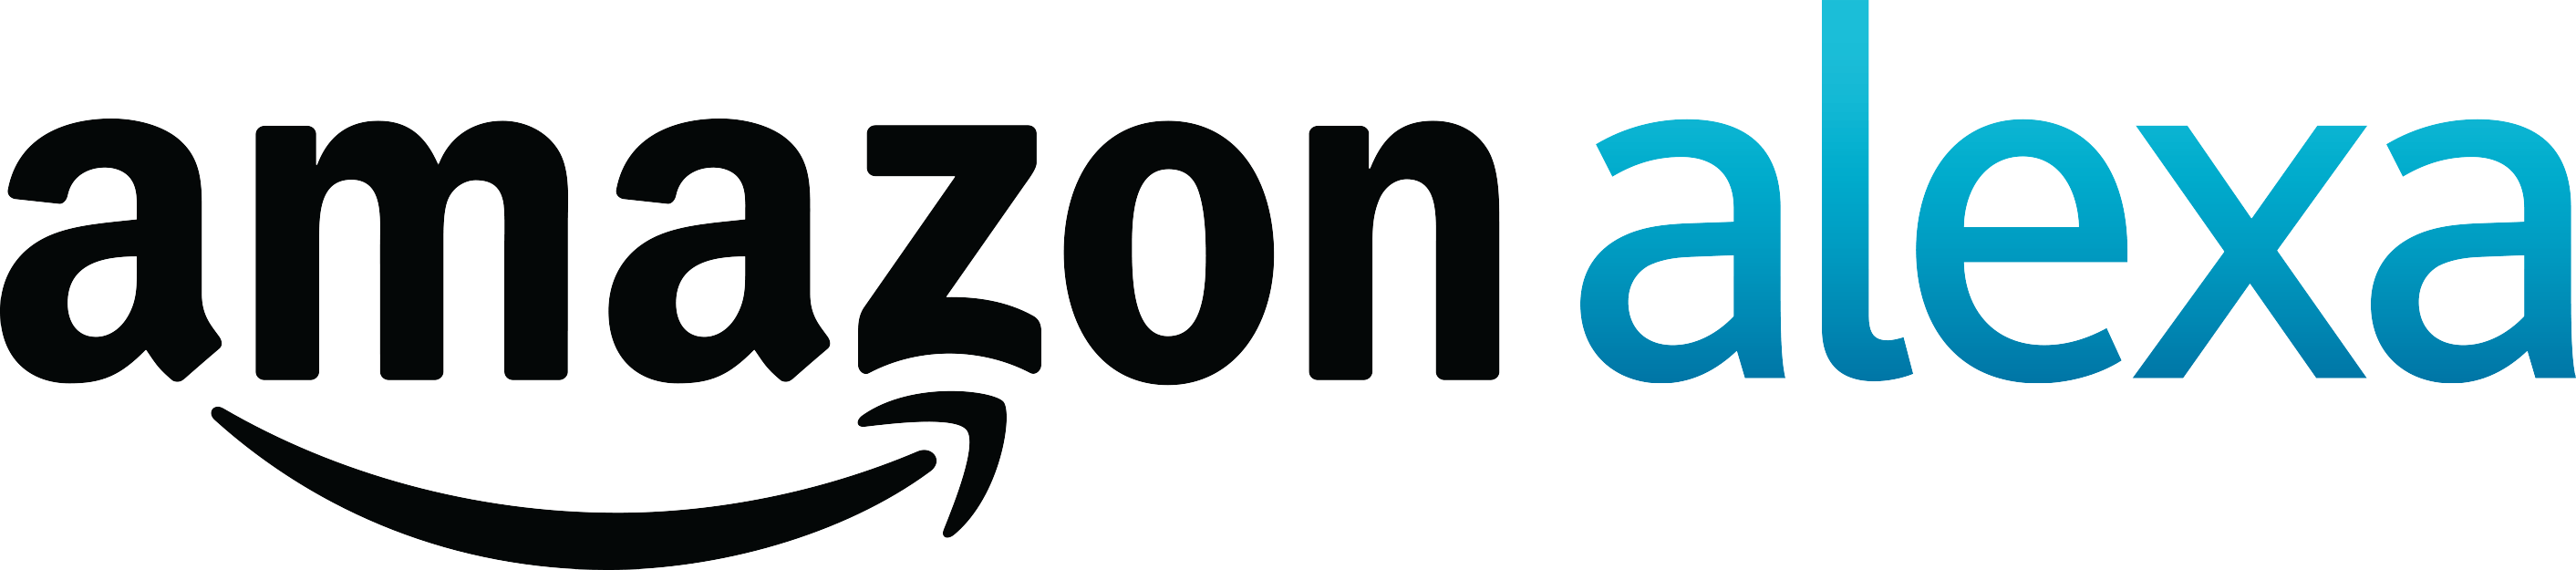 Alexa.com Logo - Amazon-Alexa-logo - Trayak